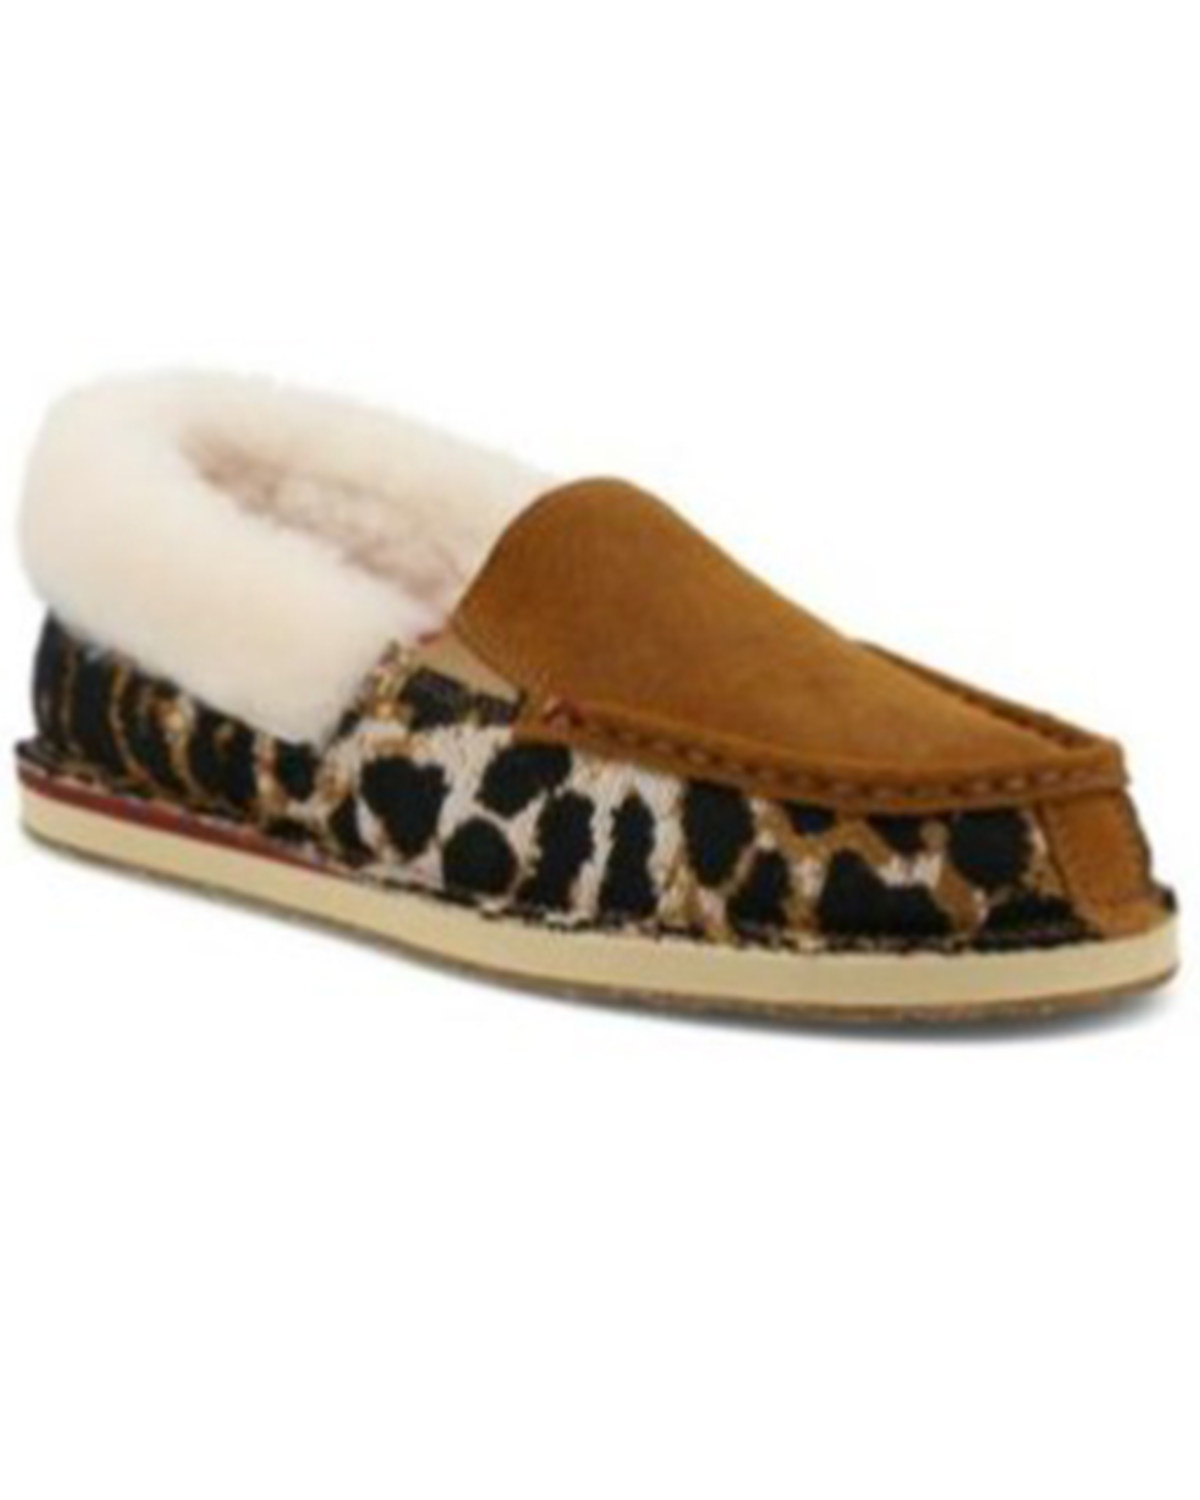 Twisted X Women's Leopard Print Fur-Lined Shoes - Moc Toe